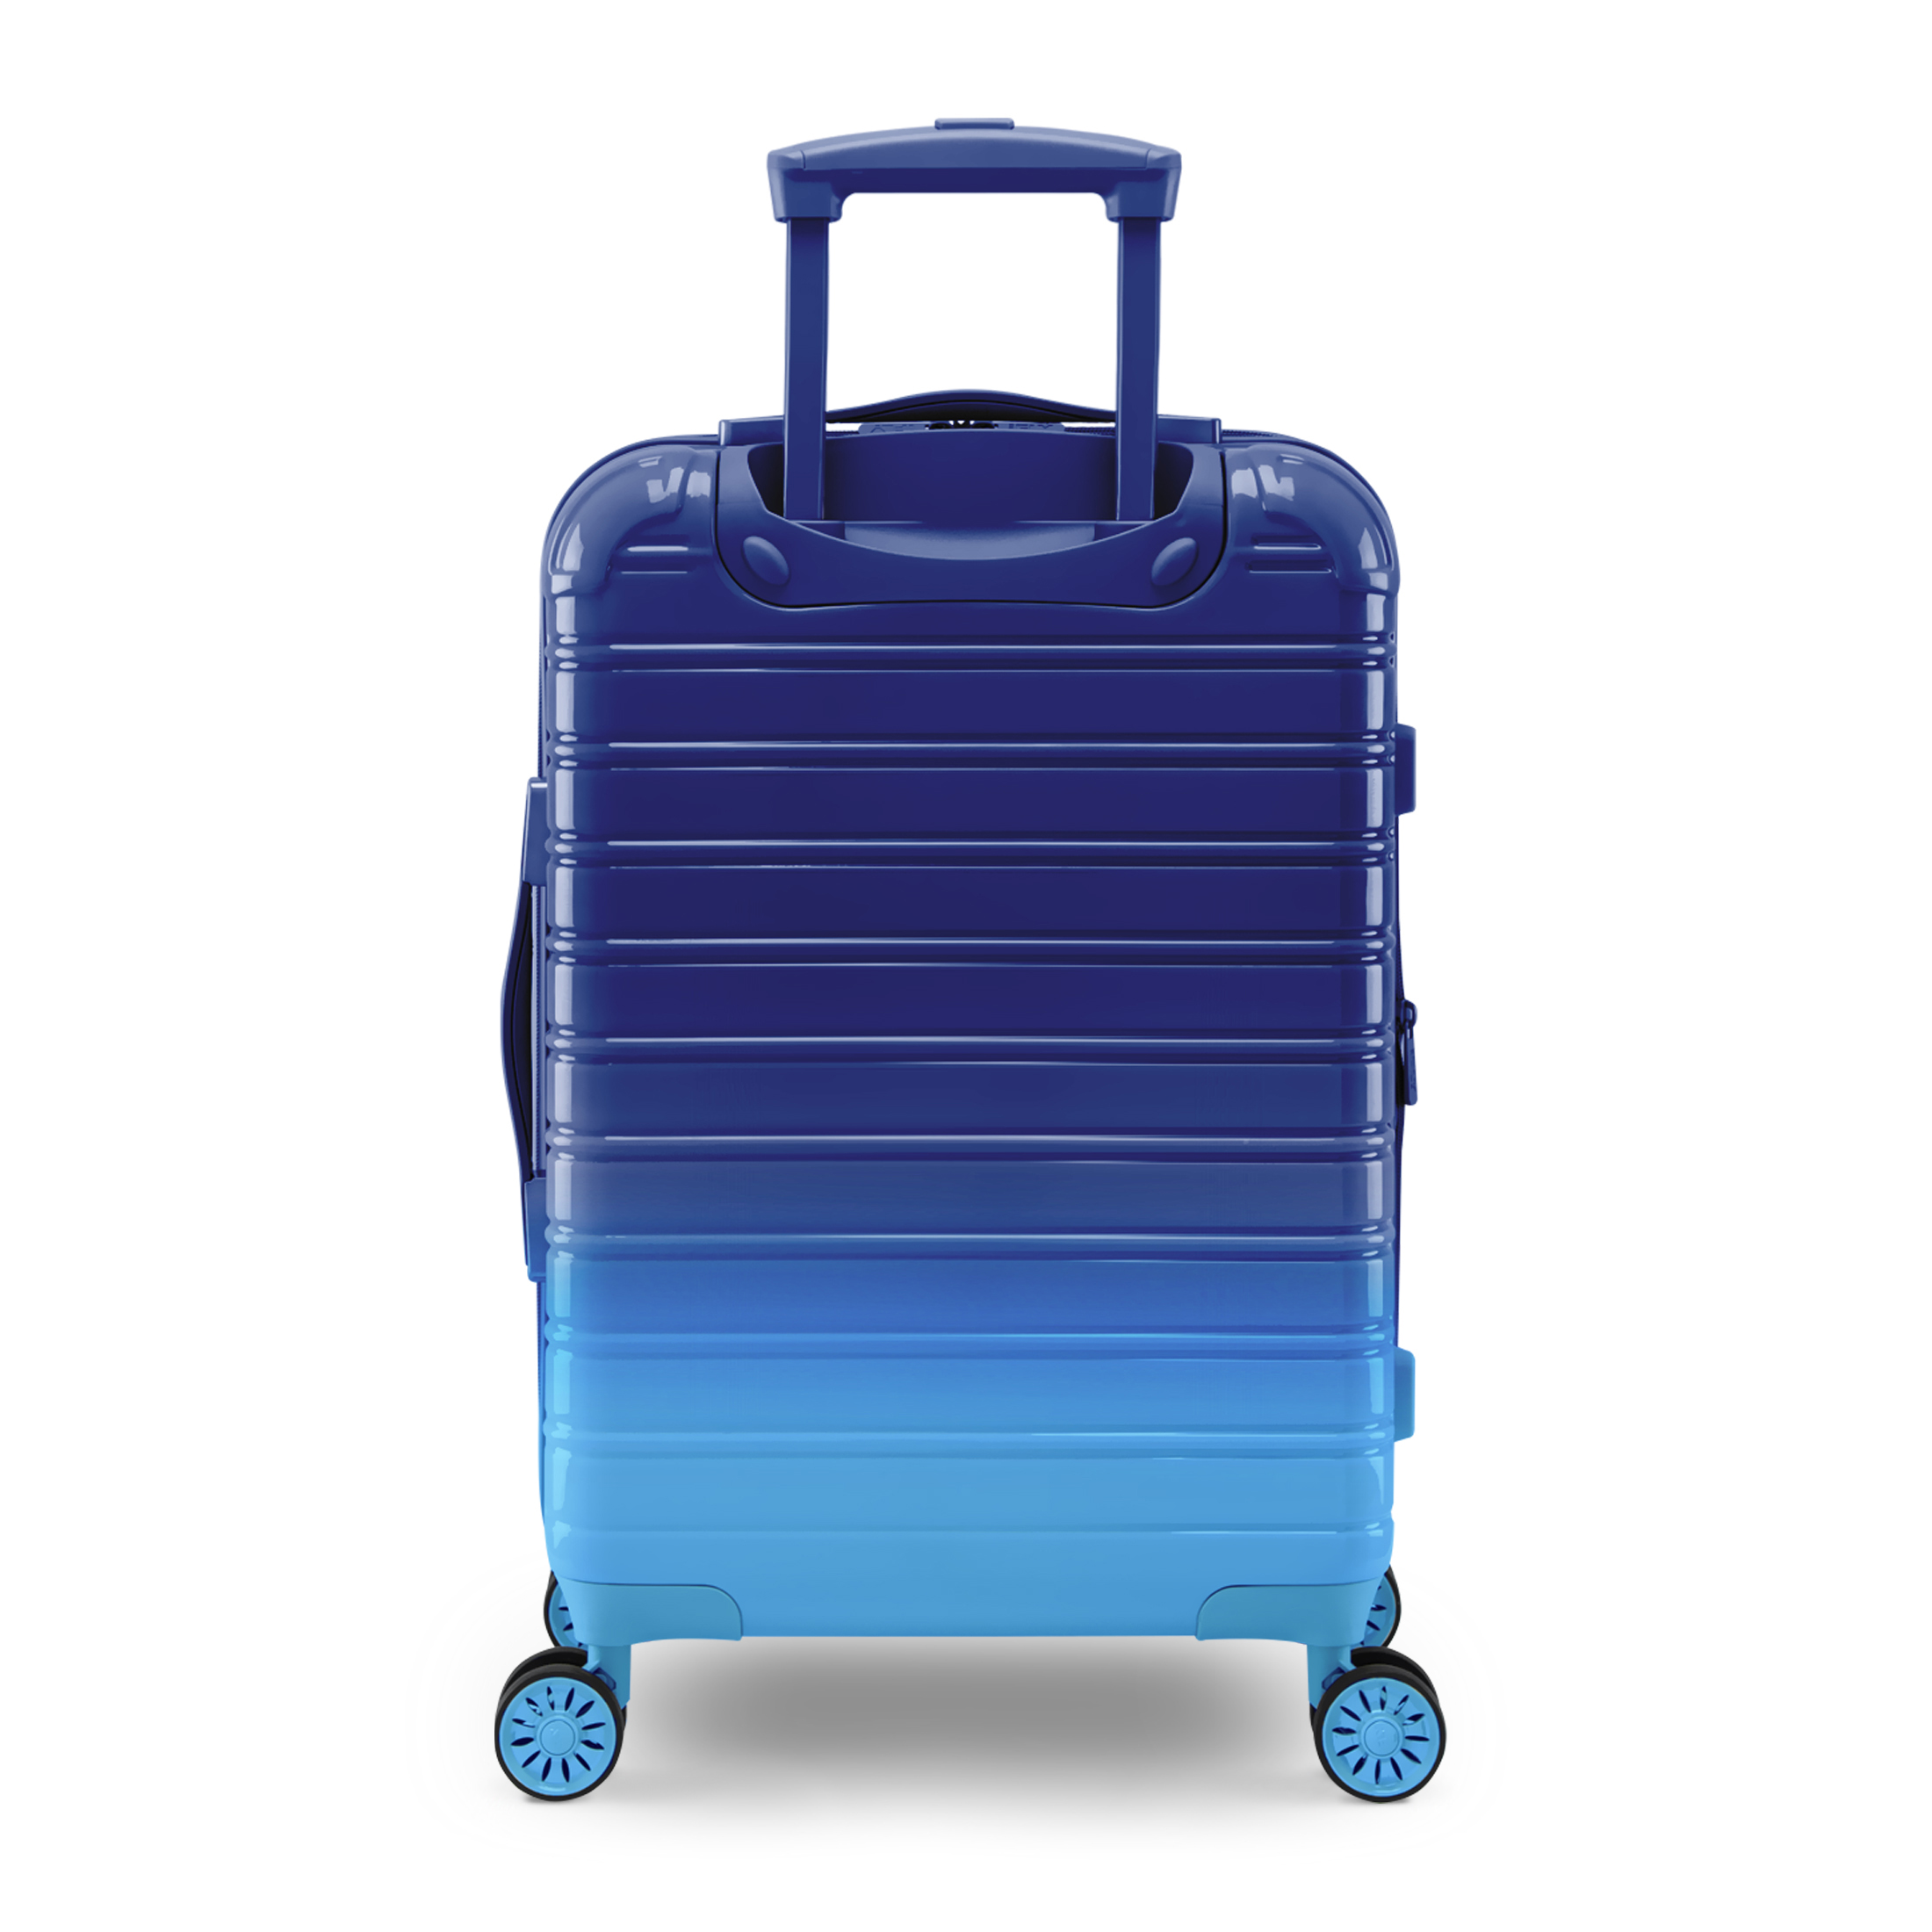 iFLY Hardside Fibertech Carry On Luggage 20", Sunny Sky - image 4 of 8